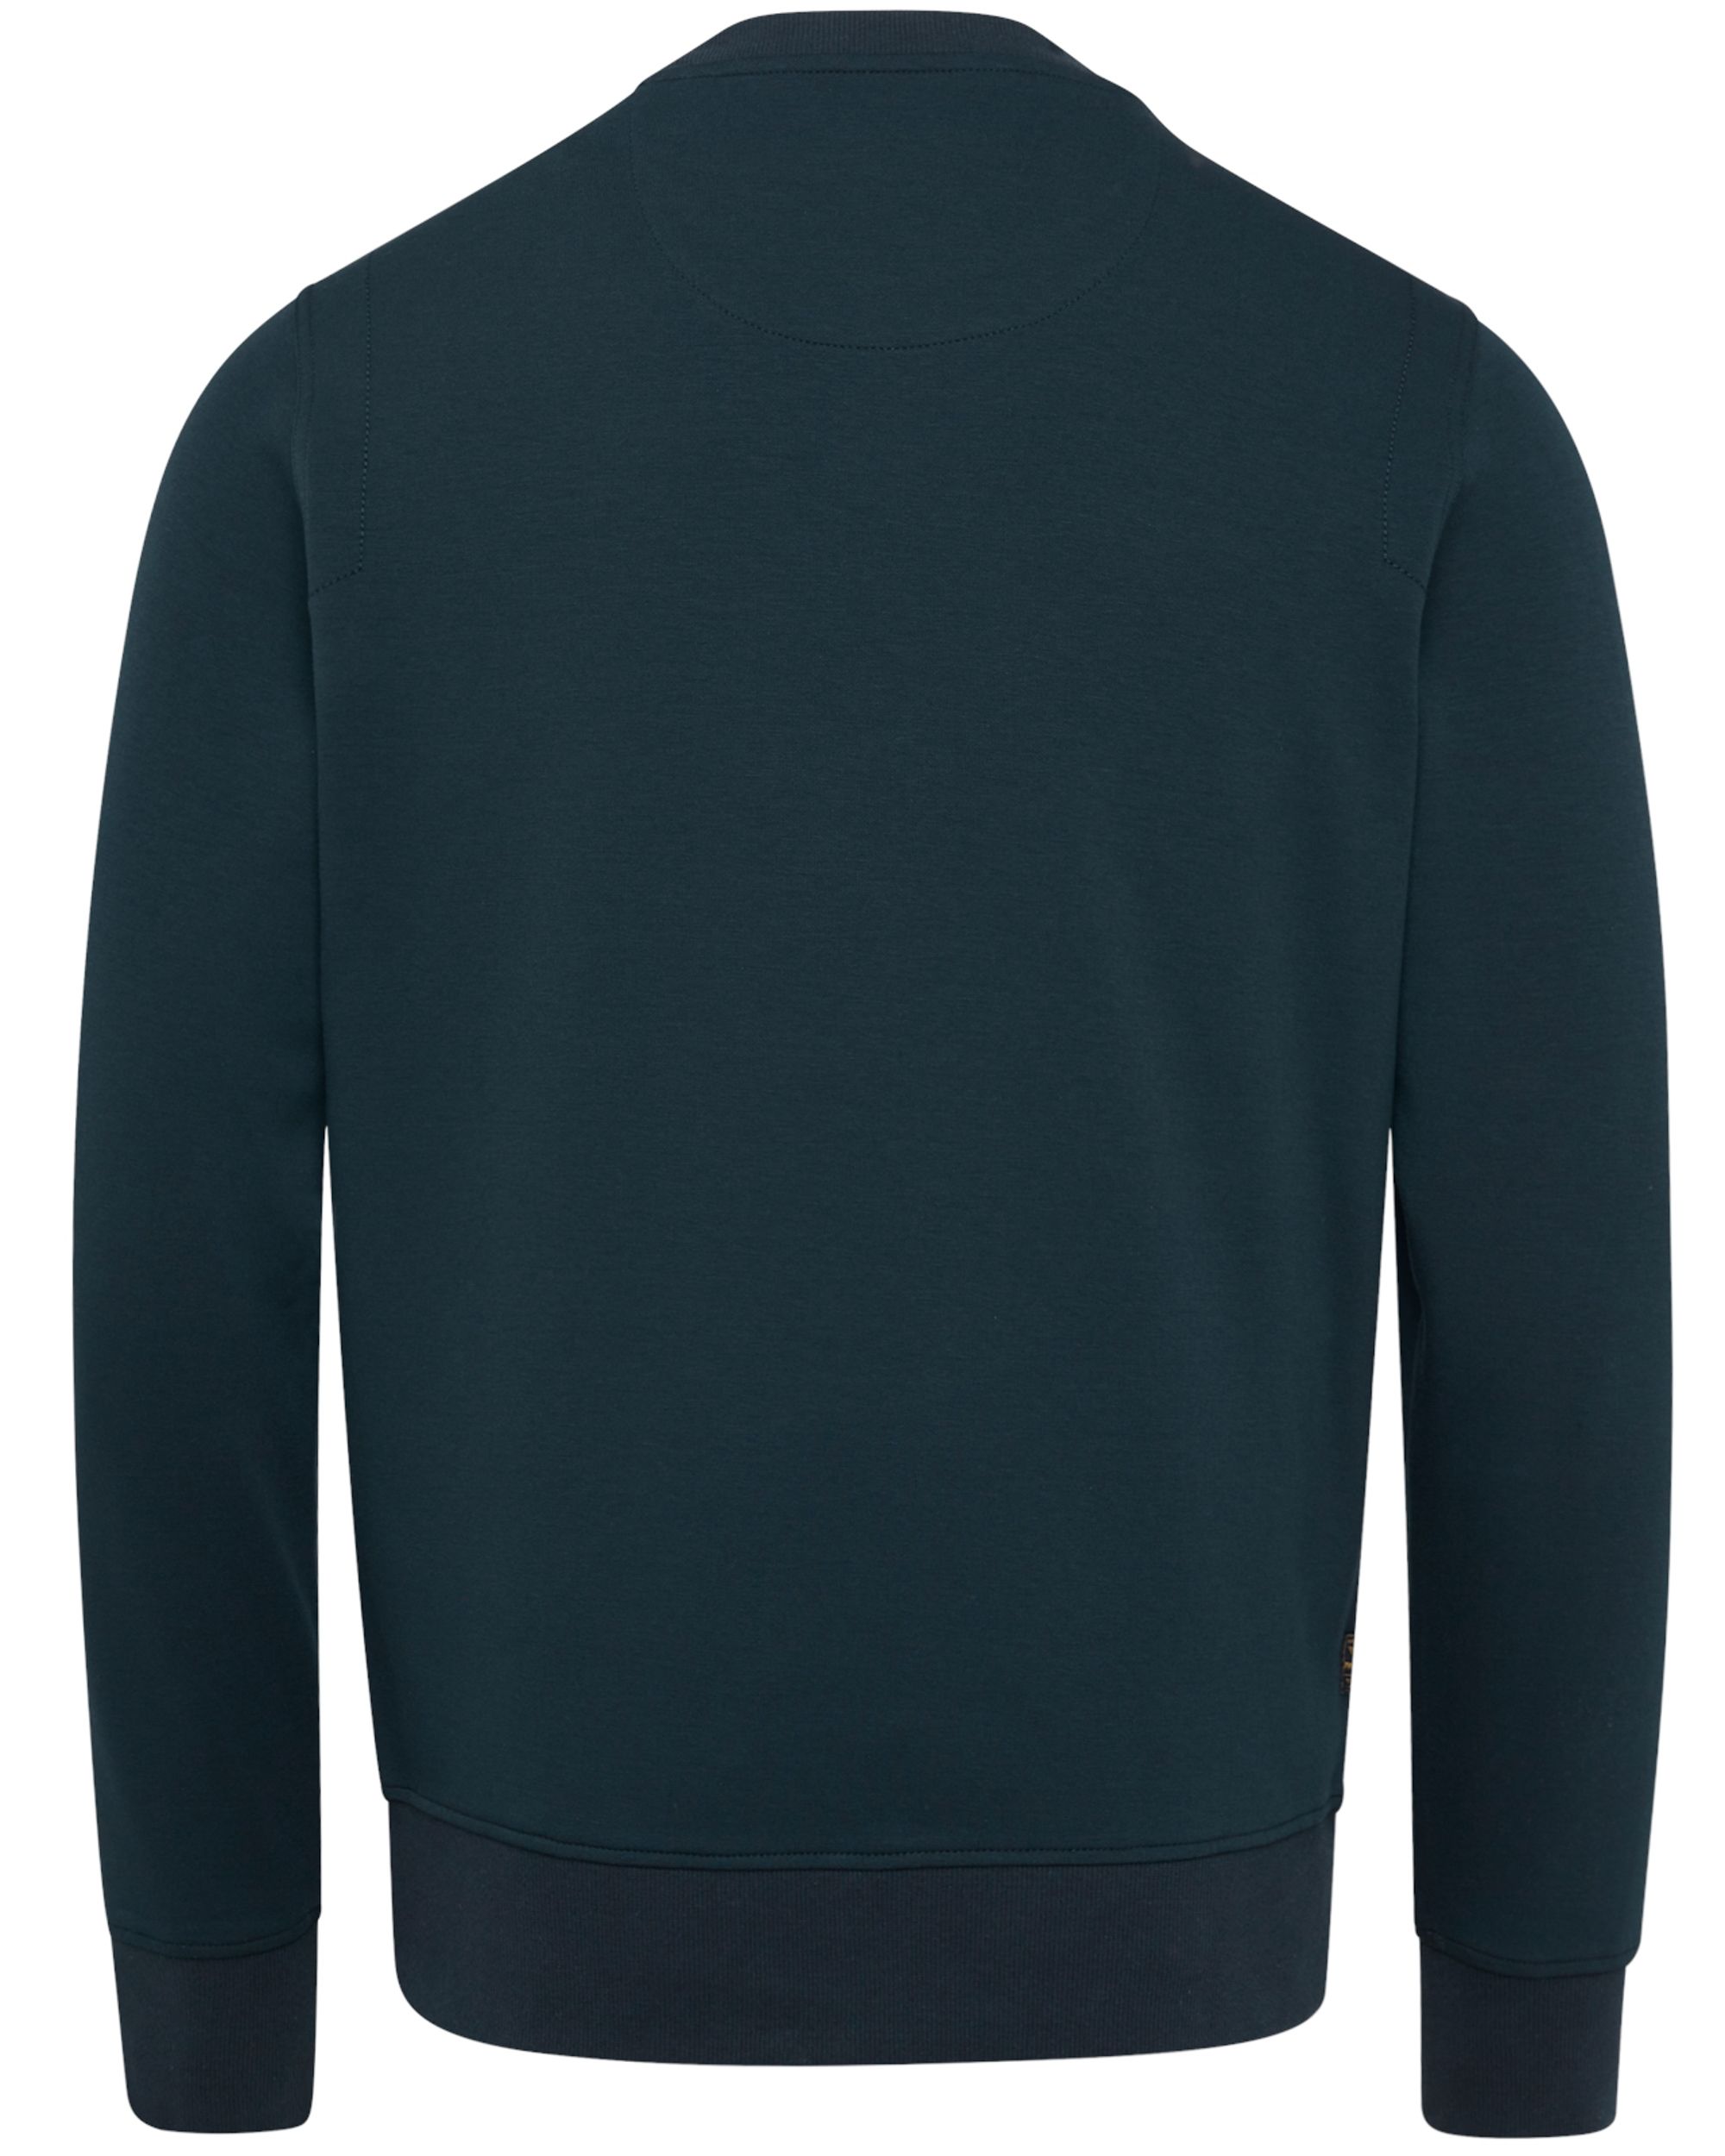 PME Legend Sweater Blauw 094383-001-L